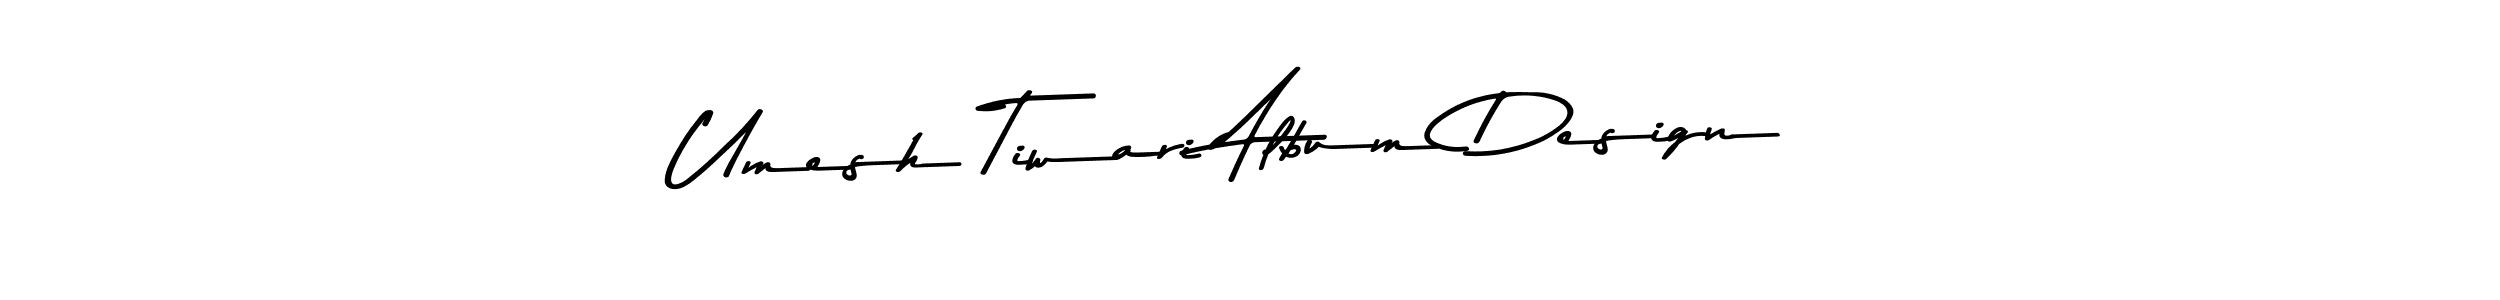 Best and Professional Signature Style for Umesh Tiwari Album Design. Asem Kandis PERSONAL USE Best Signature Style Collection. Umesh Tiwari Album Design signature style 9 images and pictures png